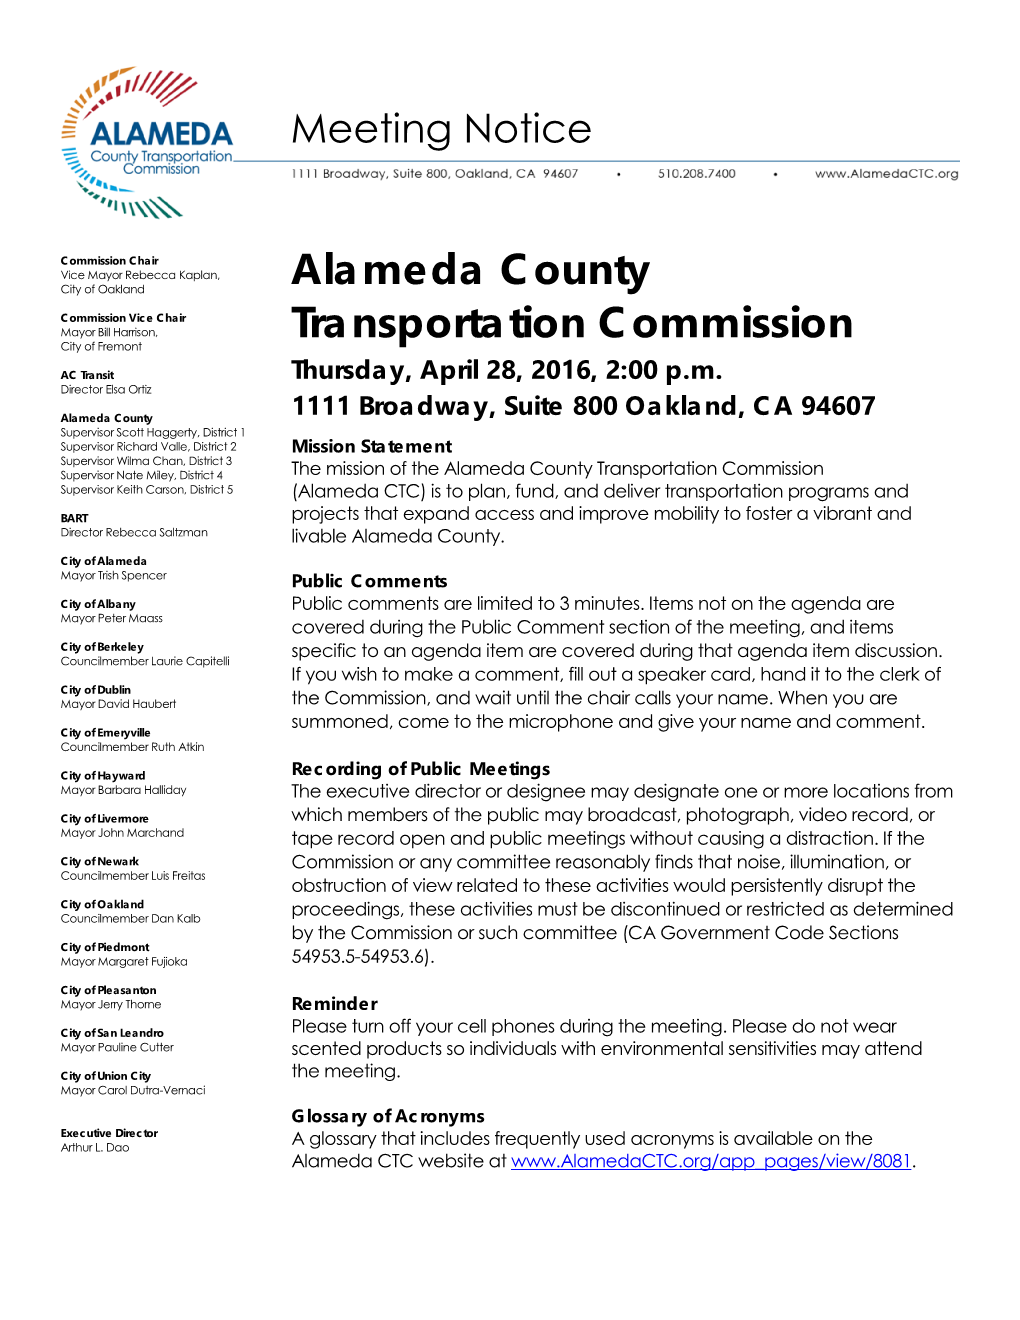 Alameda County Transportation Commission Thursday, April 28